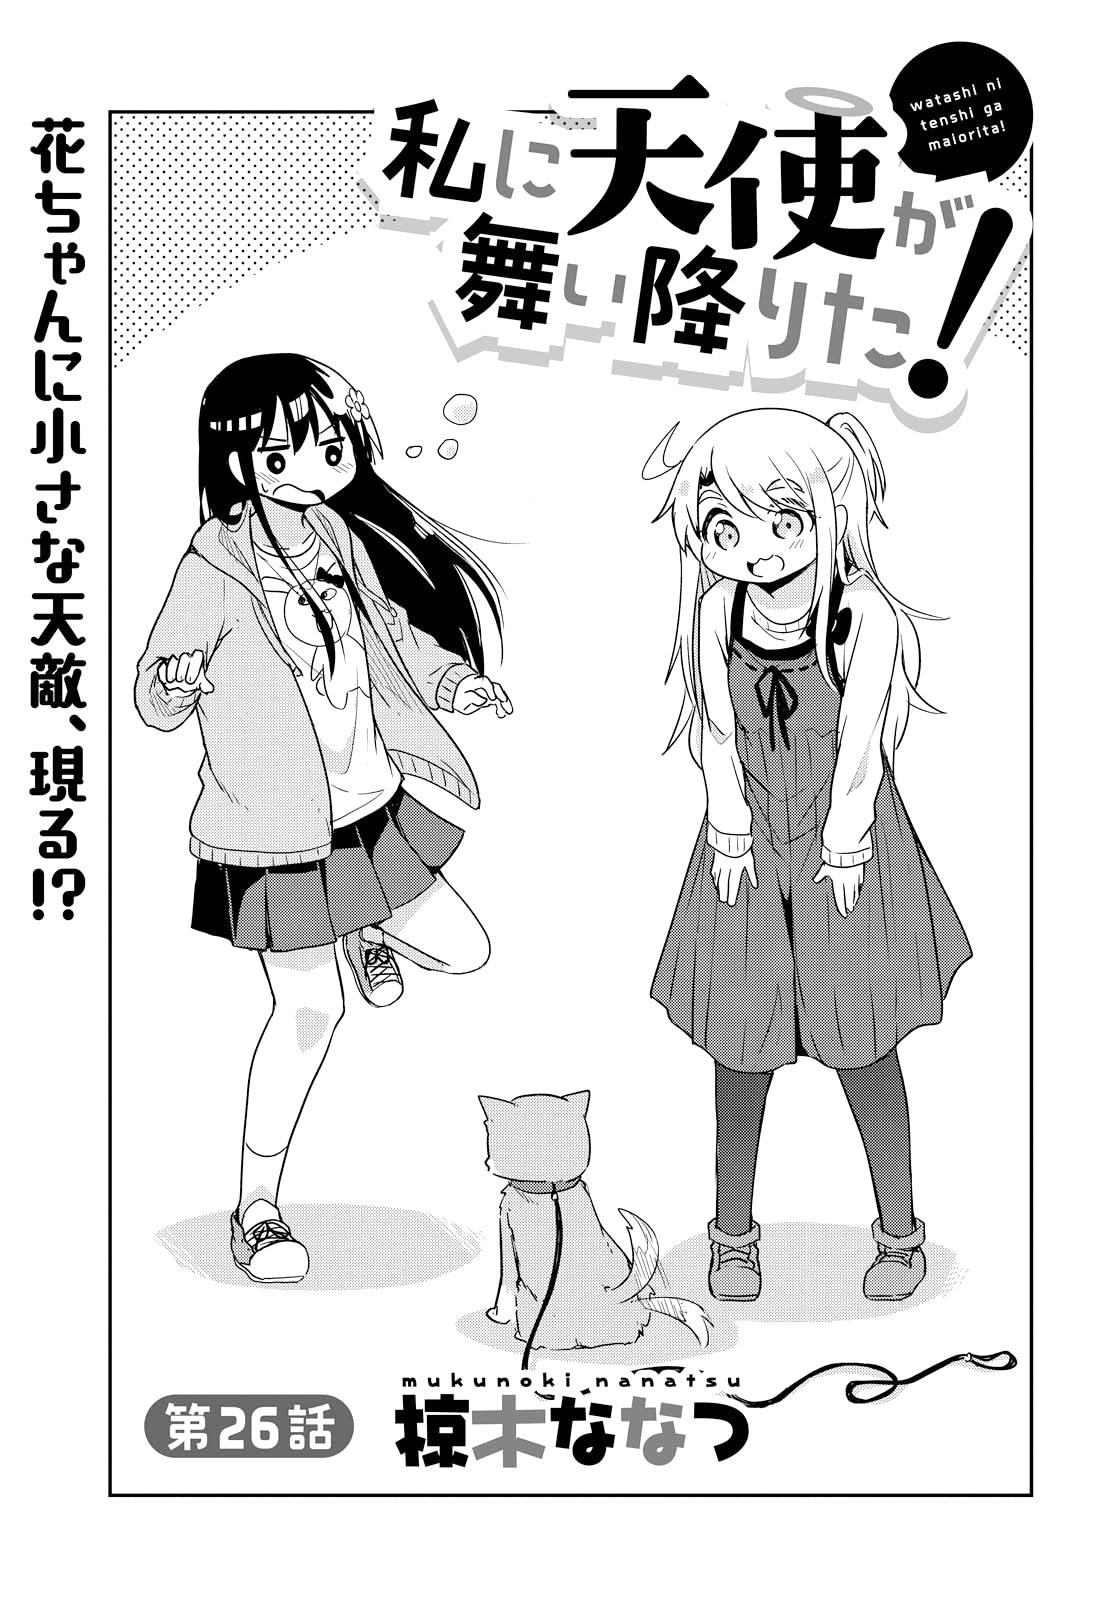 Read Watashi ni Tenshi ga Maiorita! Manga English [New Chapters] Online  Free - MangaClash